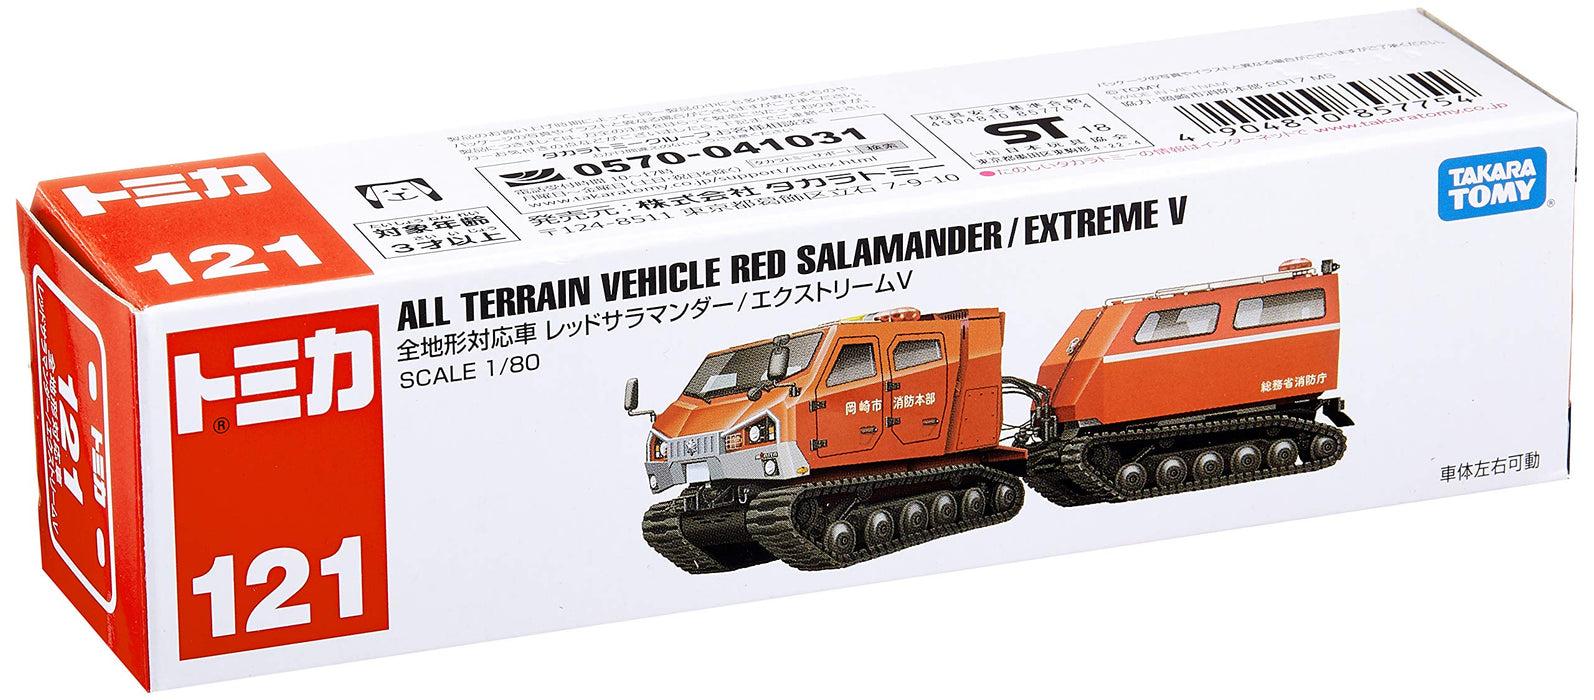 TAKARA TOMY Tomica Long 121 All Terrain Vehicle Red Salamander/ Extreme V 857754